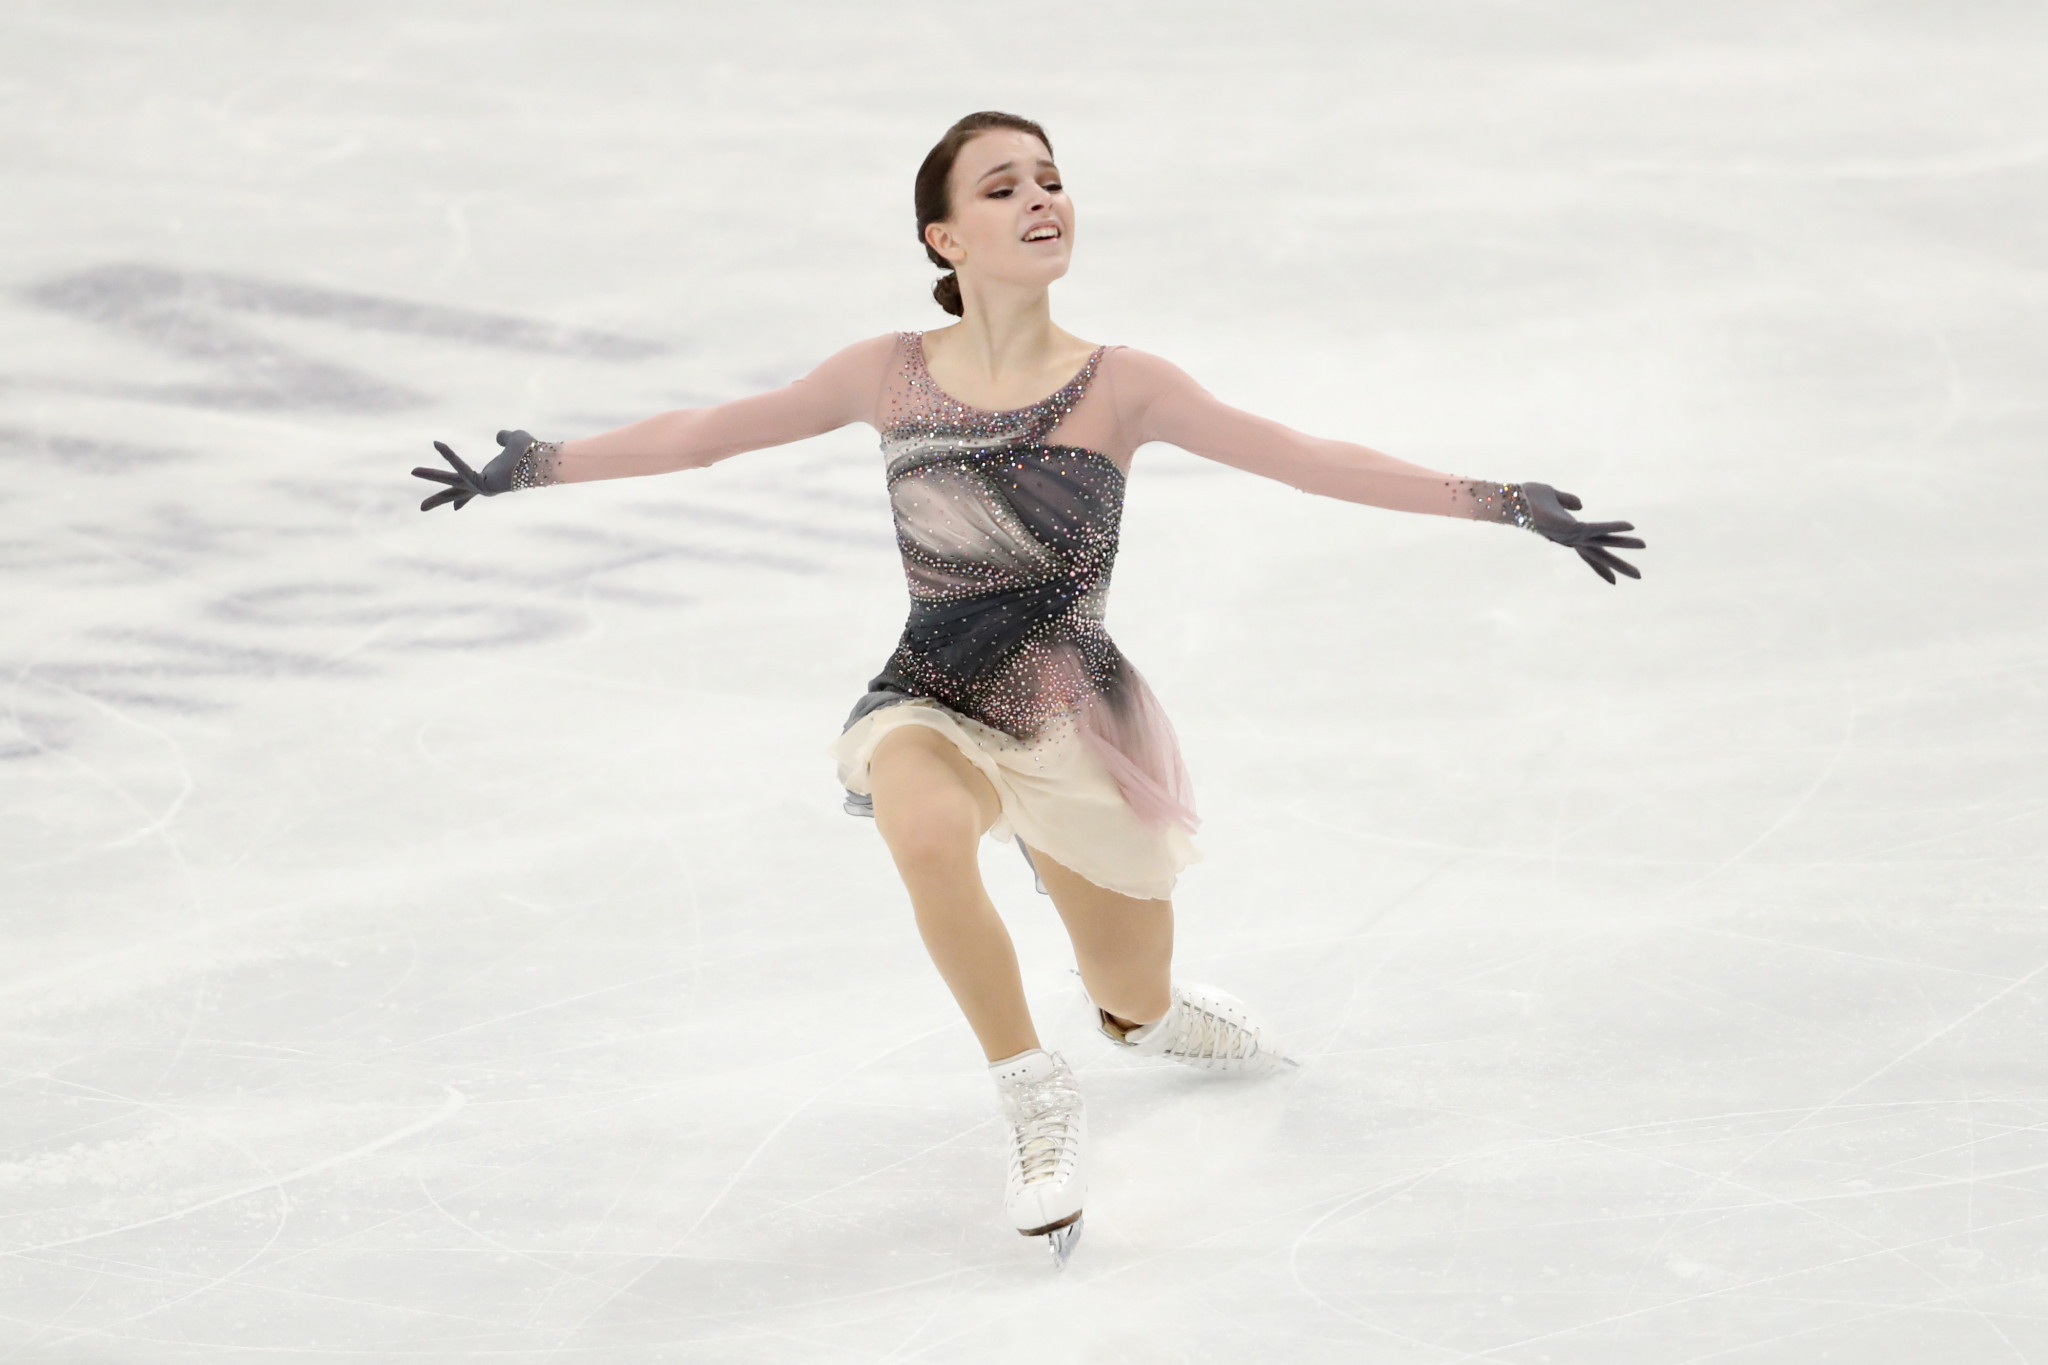 Anna Shcherbakova won the women's title at the 2021 World Figure Skating Championships ©Getty Images